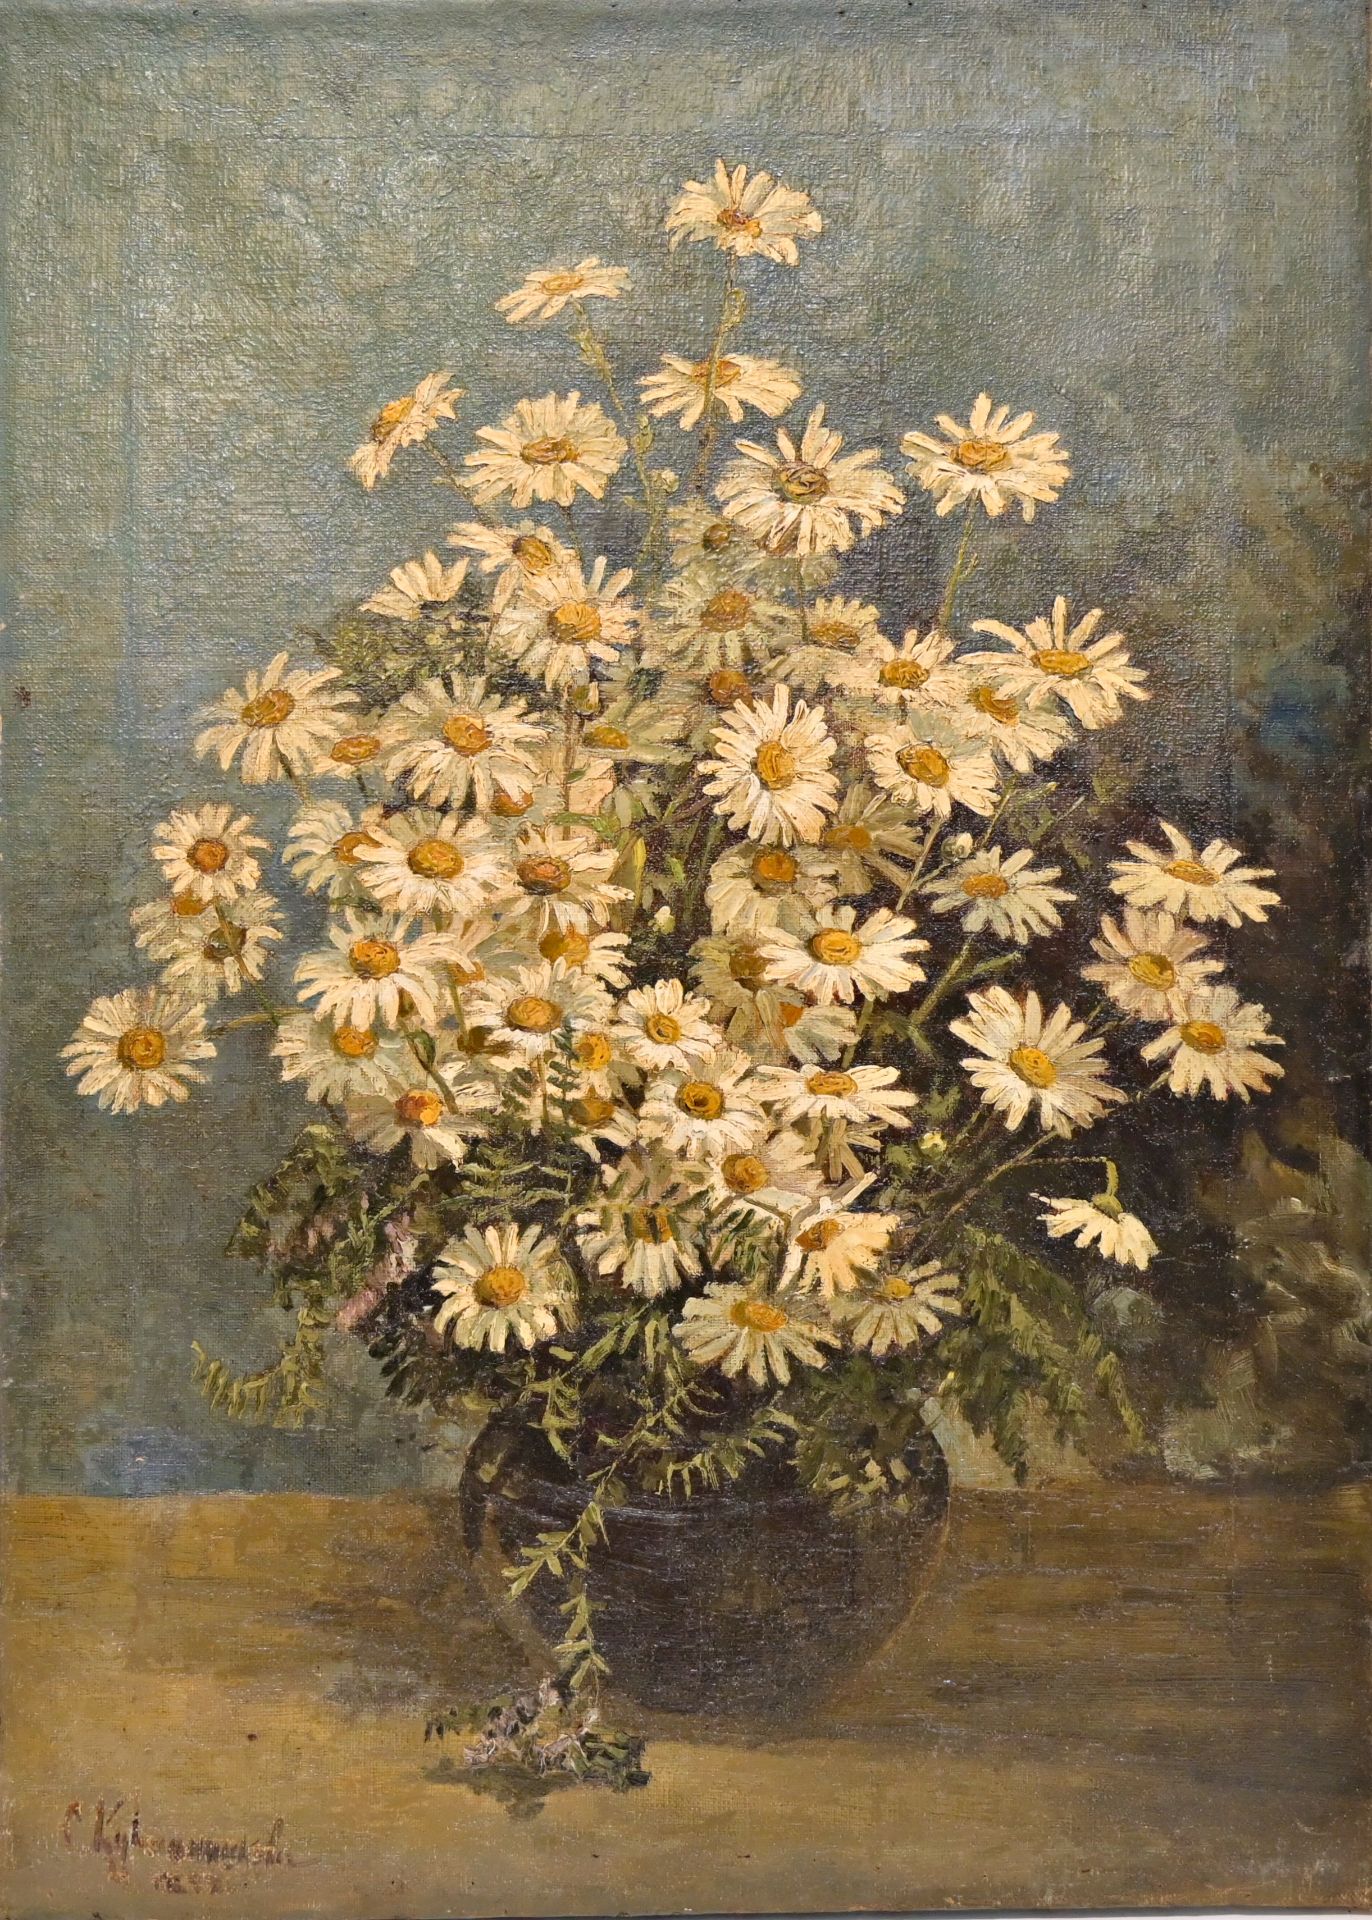 SOFIA KUVSHINNIKOVA (1847-1907). Still life with daisies, oil on canvas, signature and date illegibl - Image 2 of 6